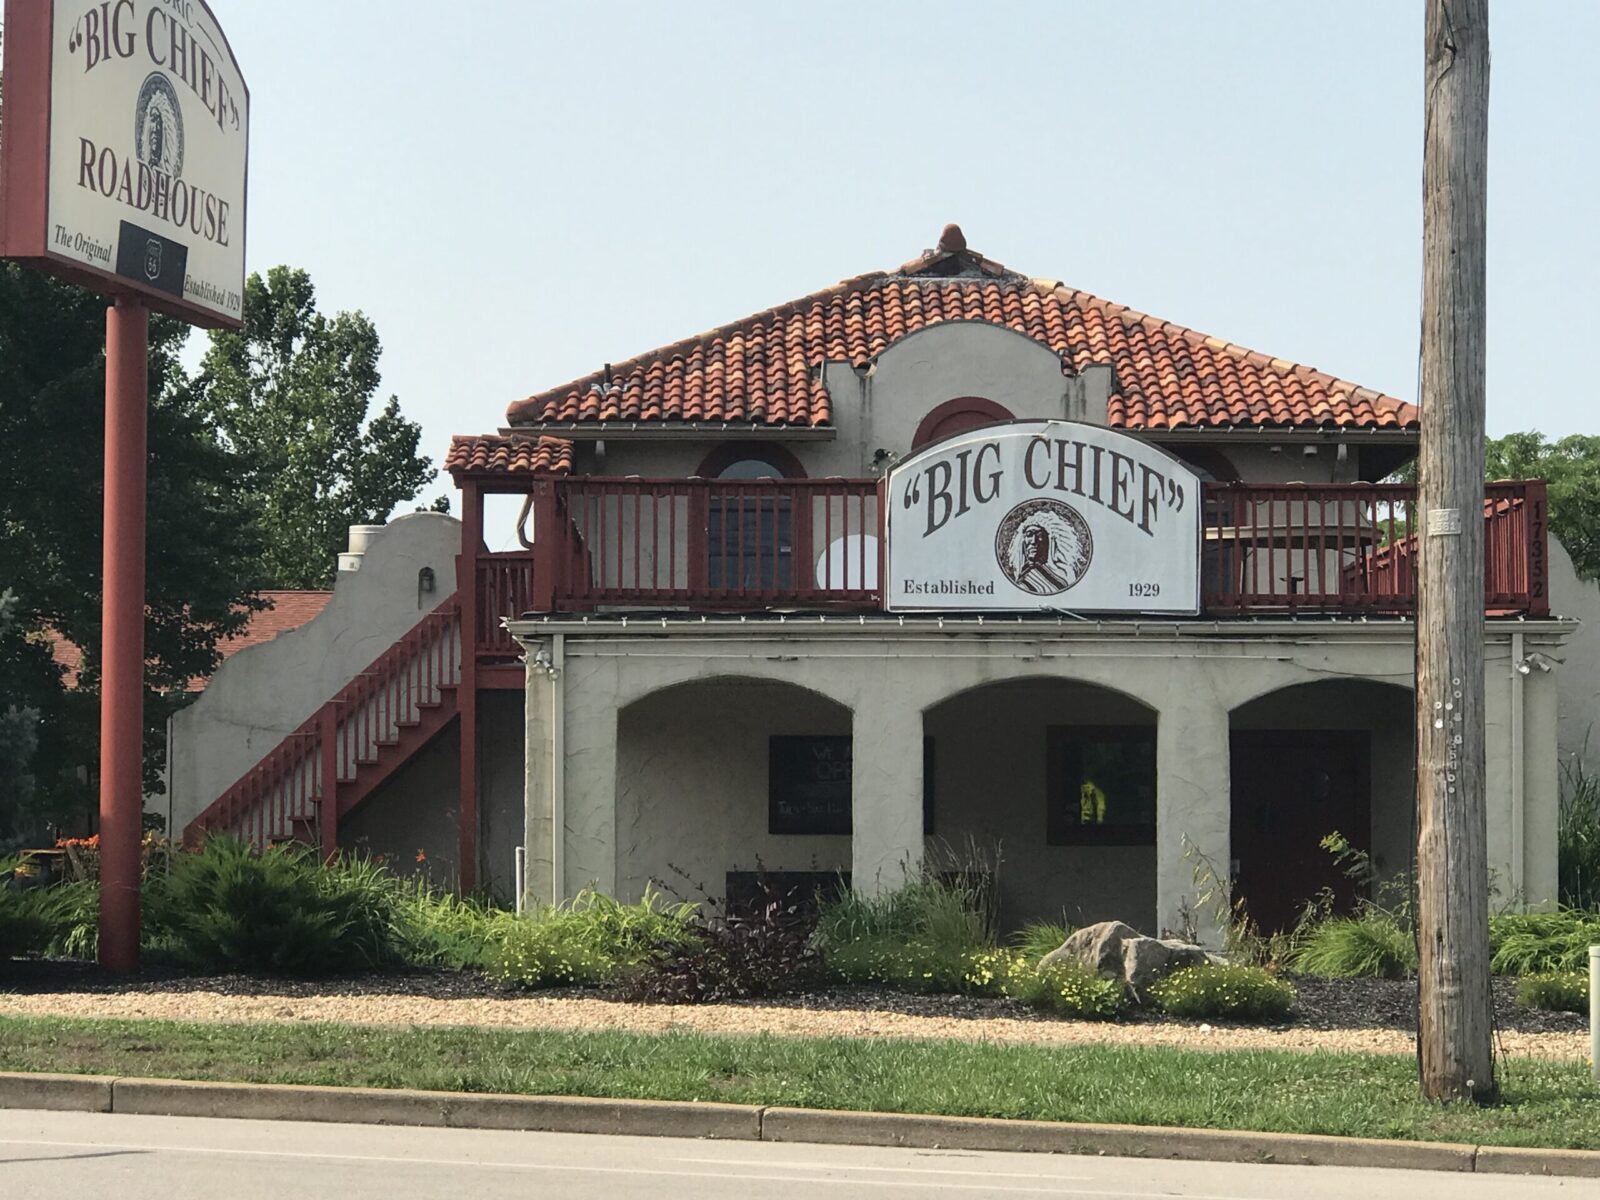 Big Chief Roadhouse, Wildwood, Missouri